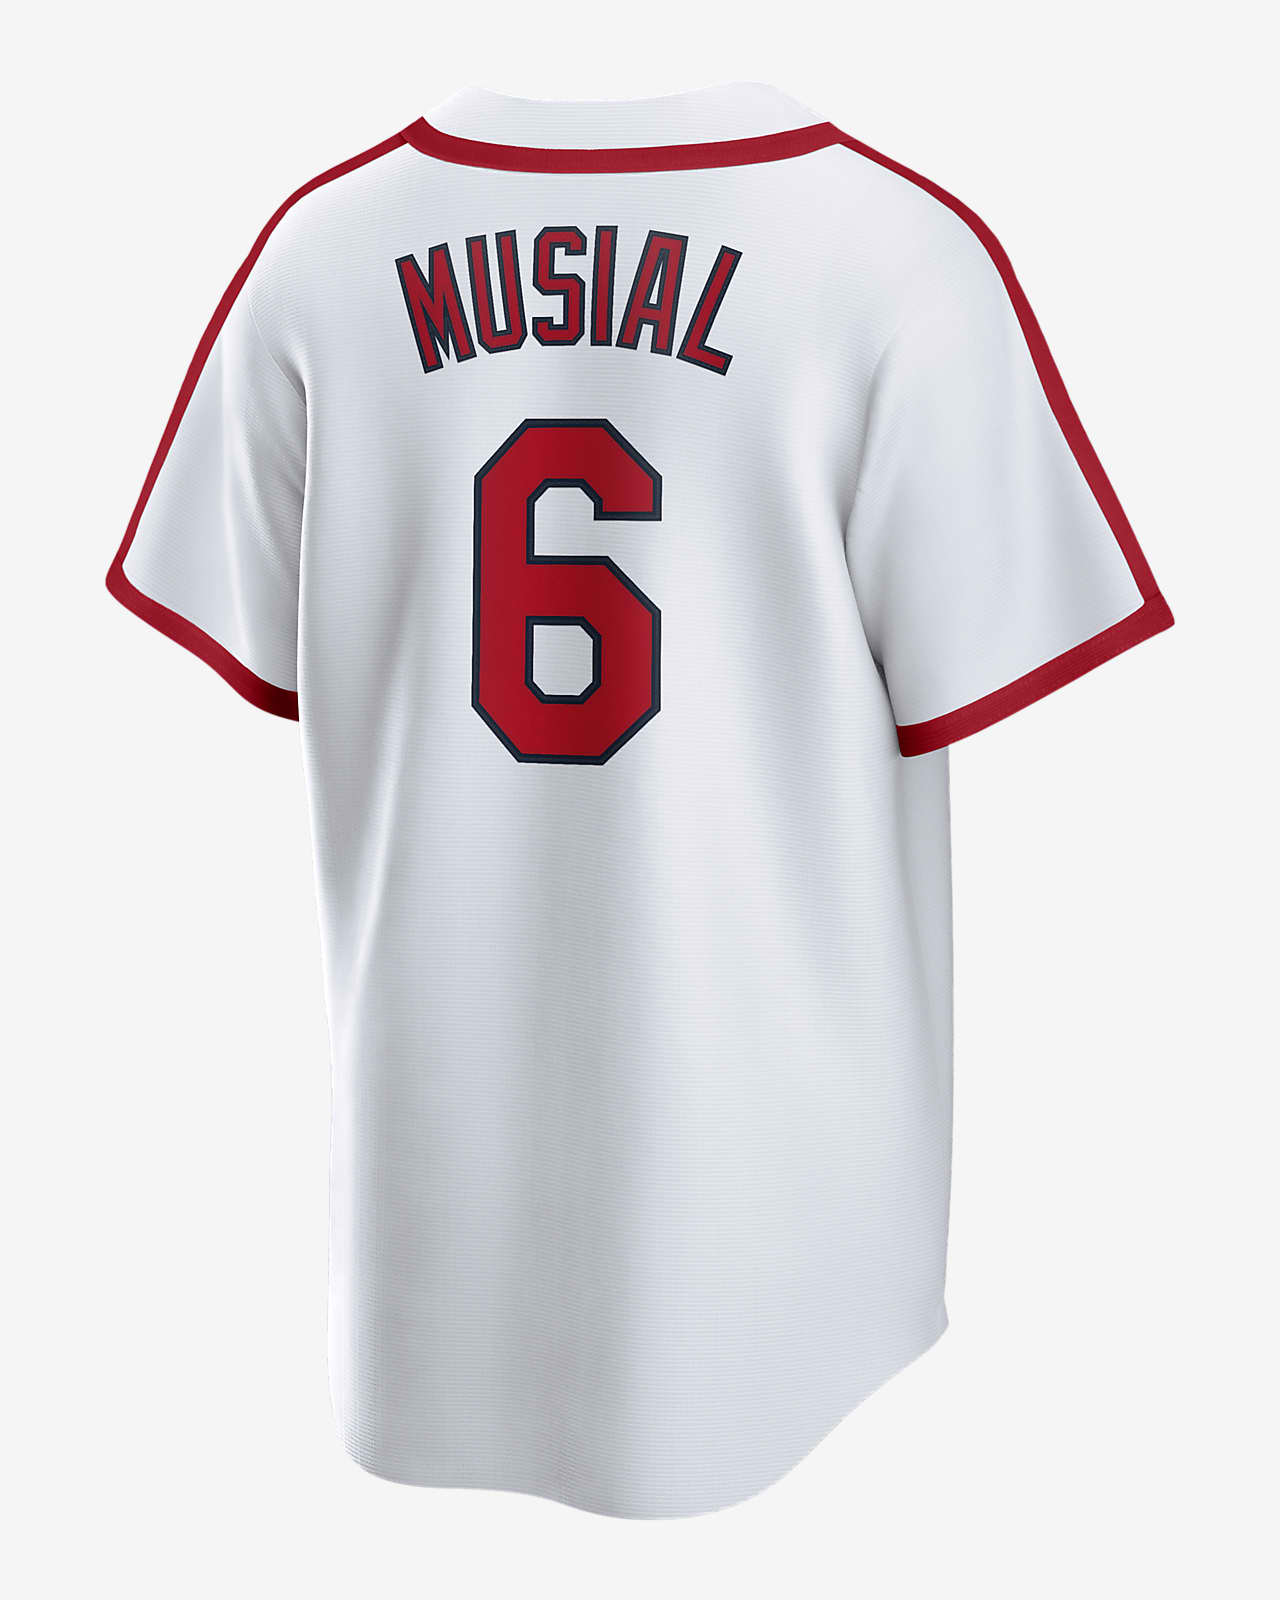 MLB St. Louis Cardinals (Stan Musial) Men's Cooperstown Baseball